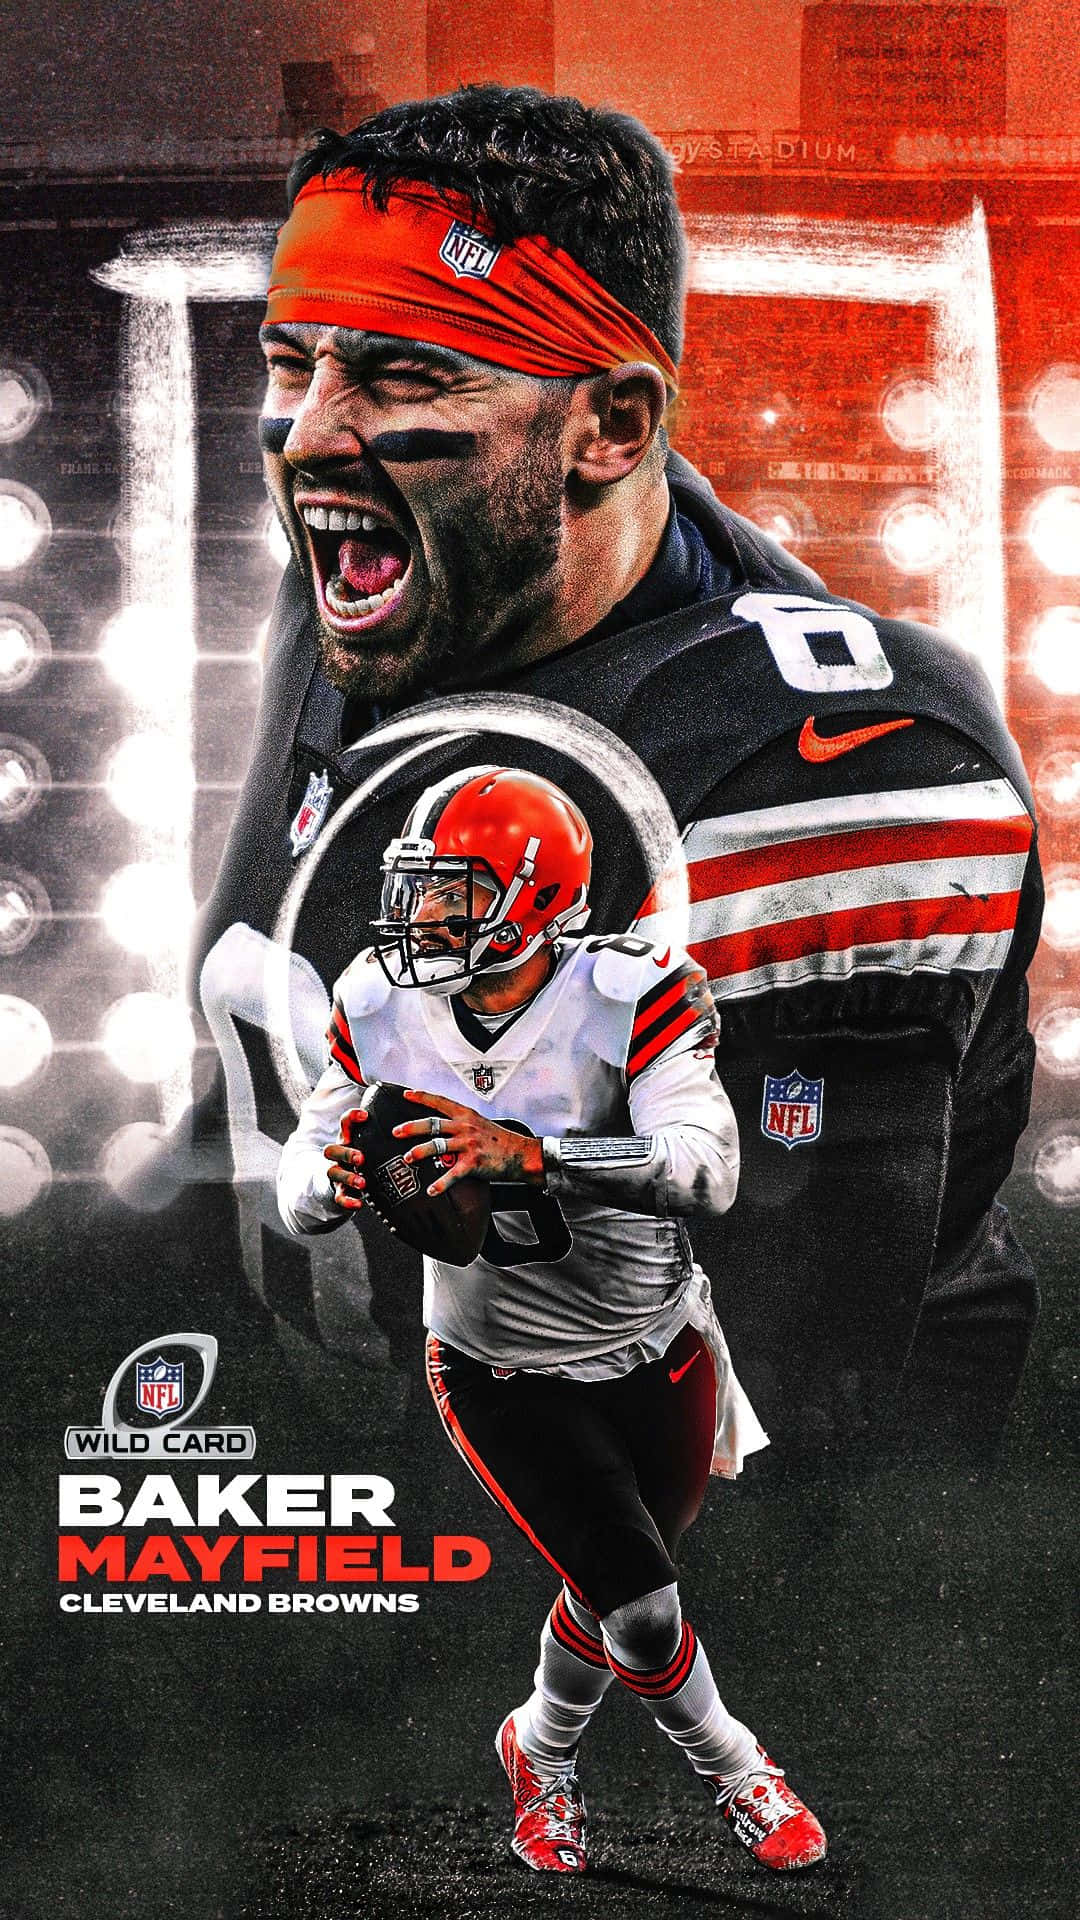 NFL-stjernen Baker Mayfield pyntet dette livlige tapet. Wallpaper